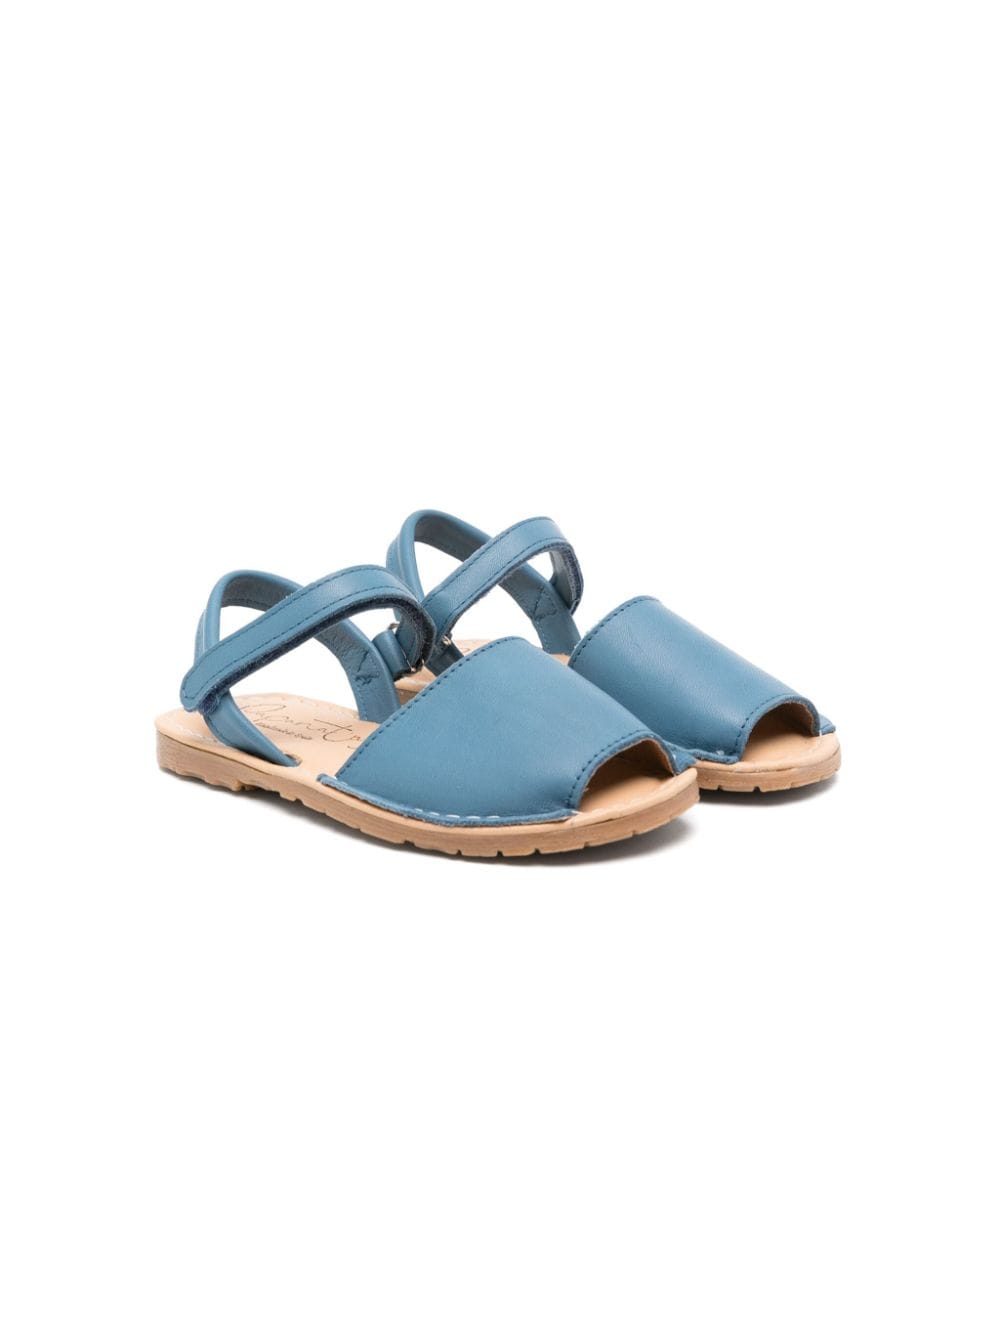 Eli1957 Menorcan leather sandals - Blue von Eli1957